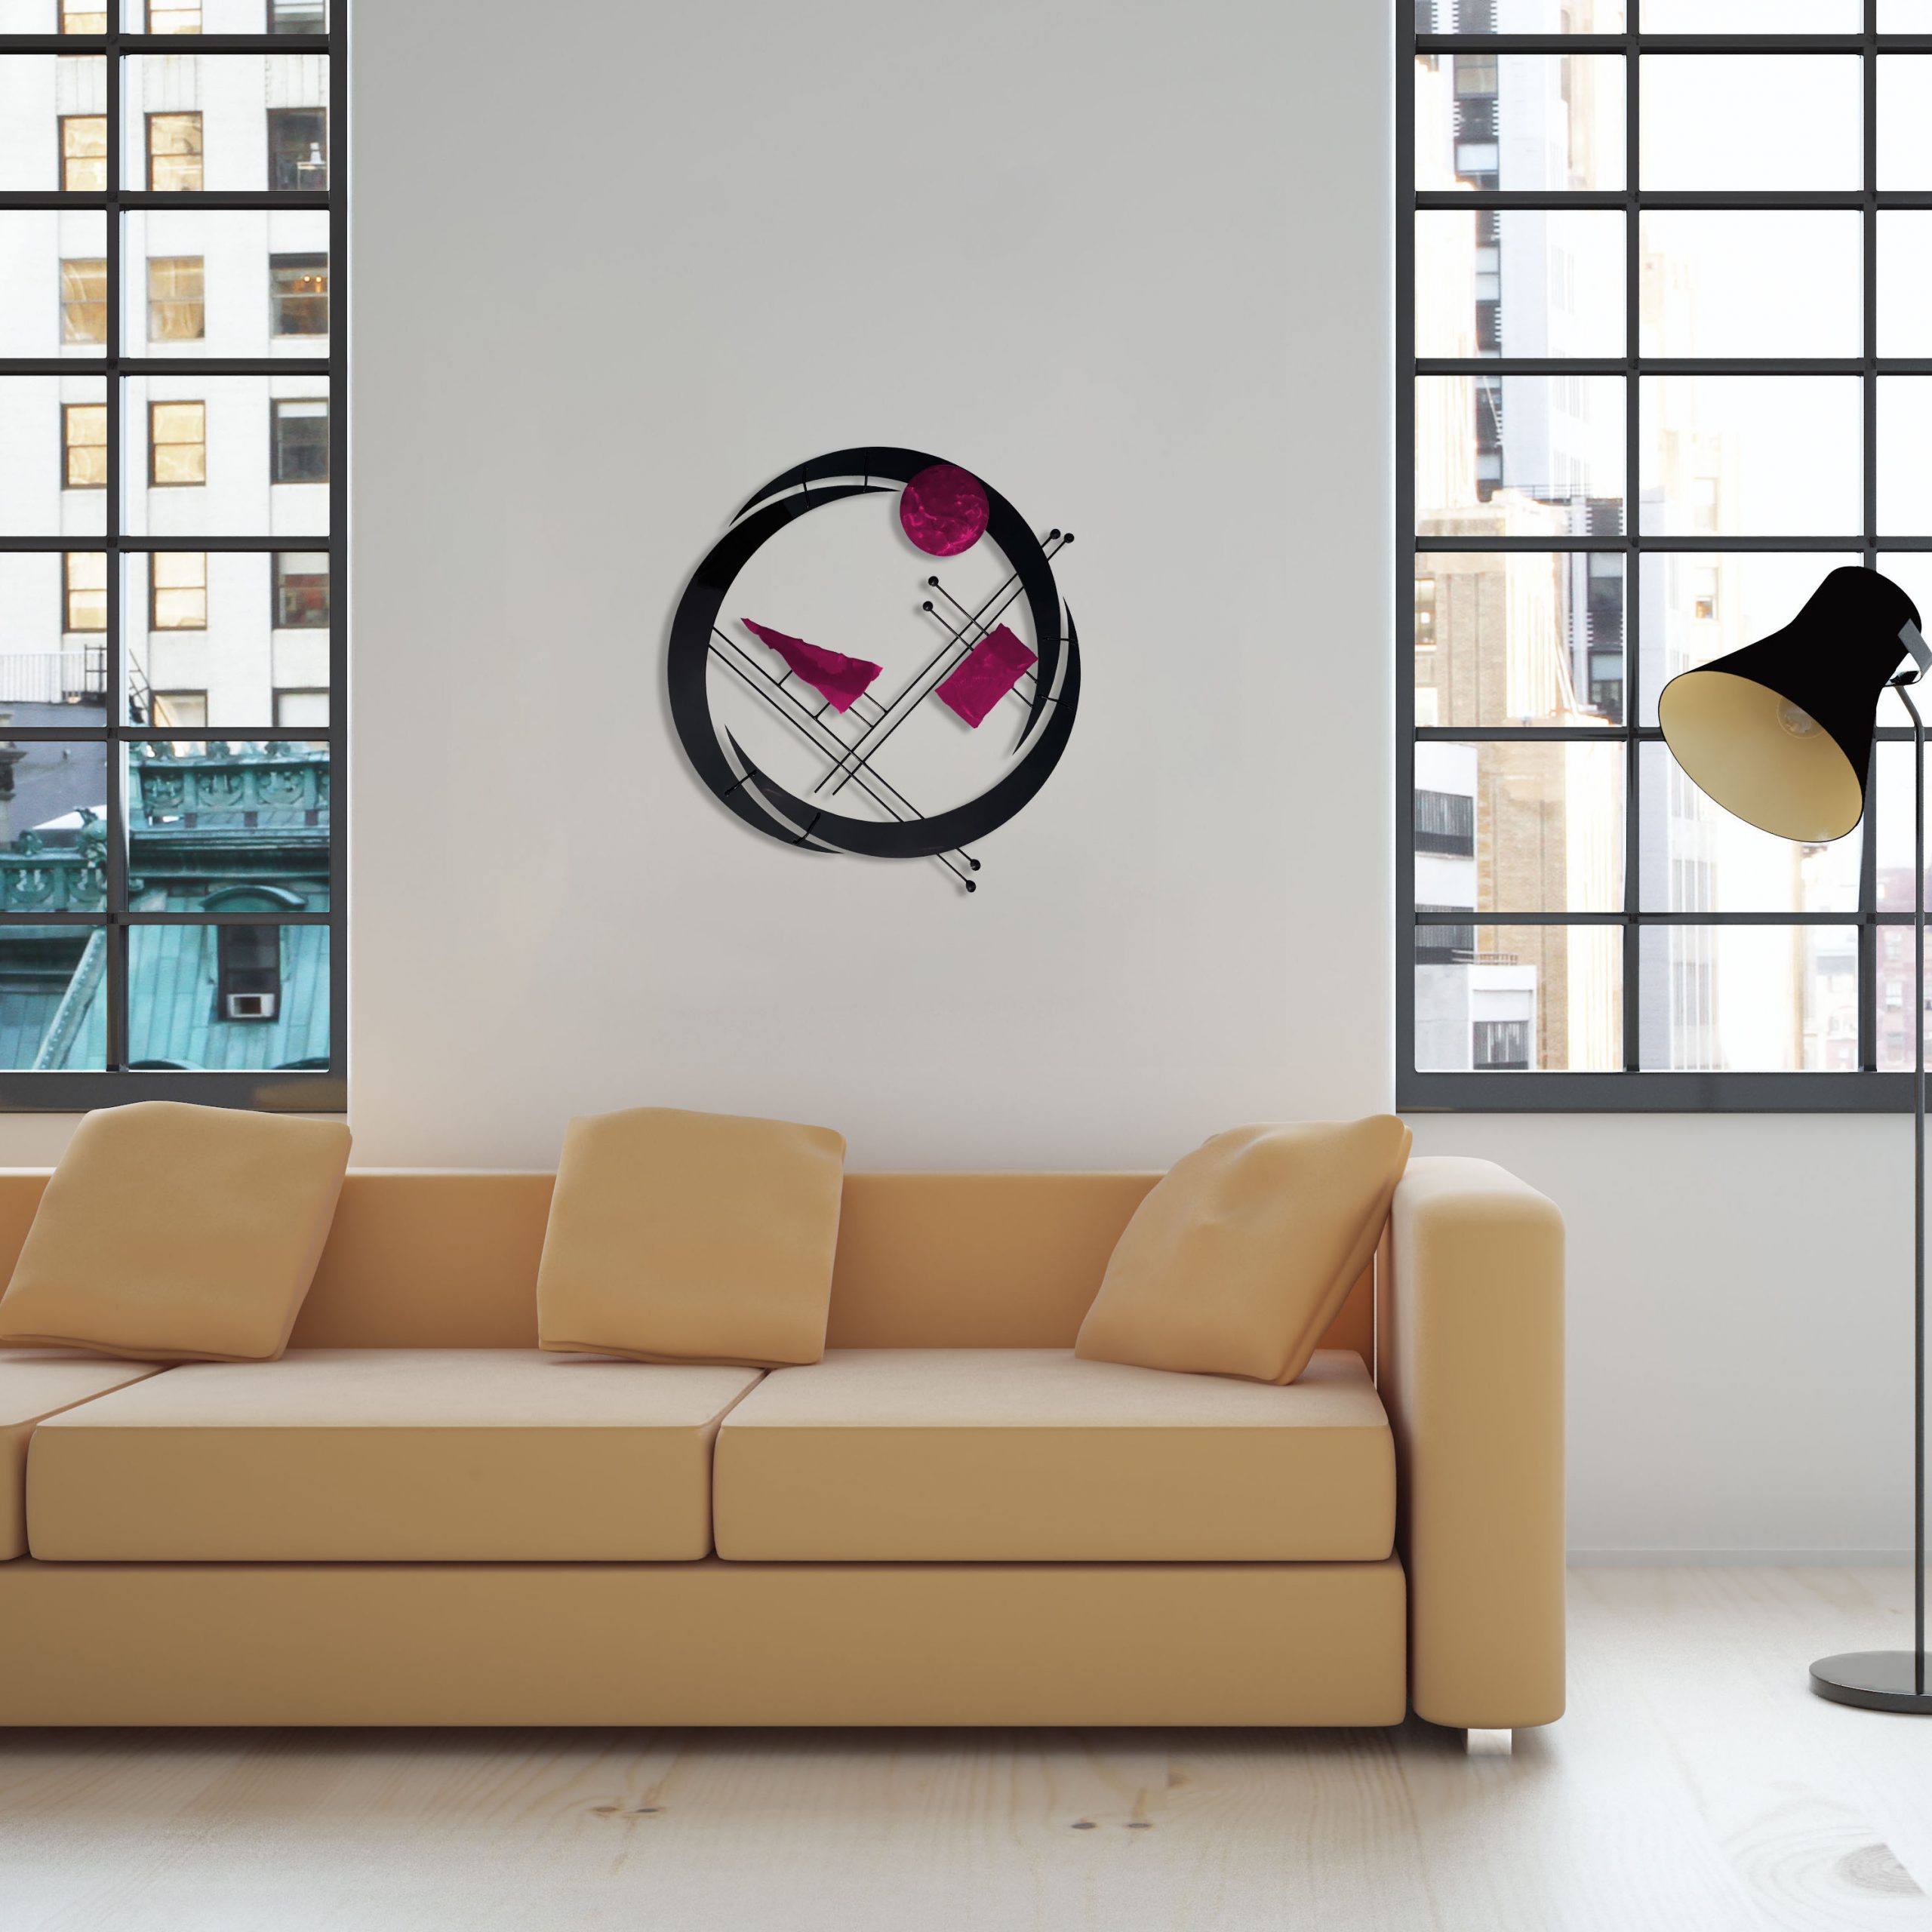 Raspberry-Swirl-in-living-room-scaled